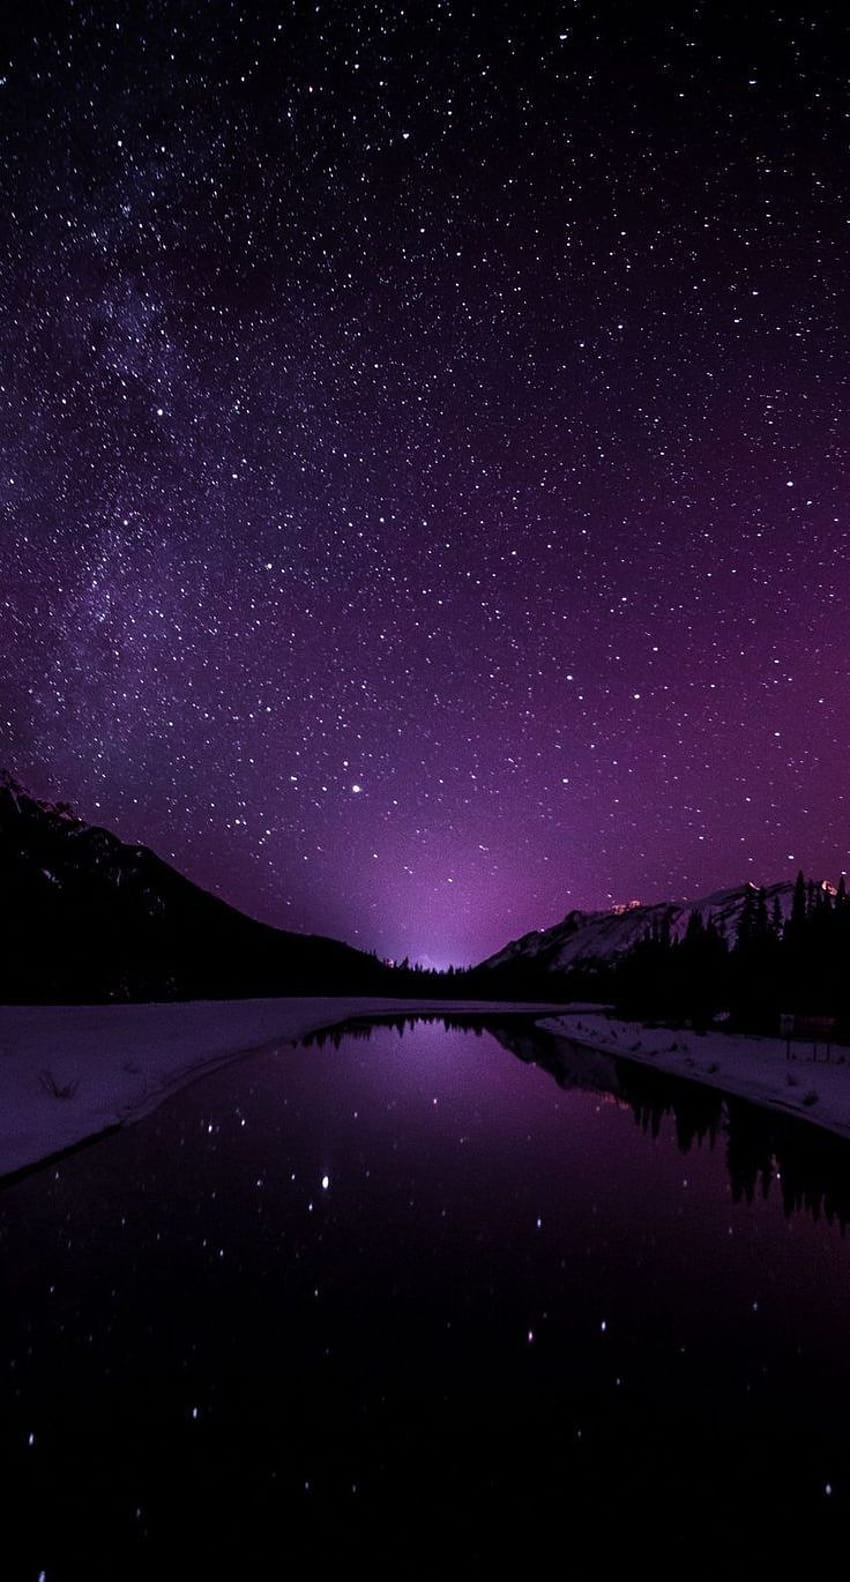 Iphone wallpaper purple night sky above the lake - Dark purple